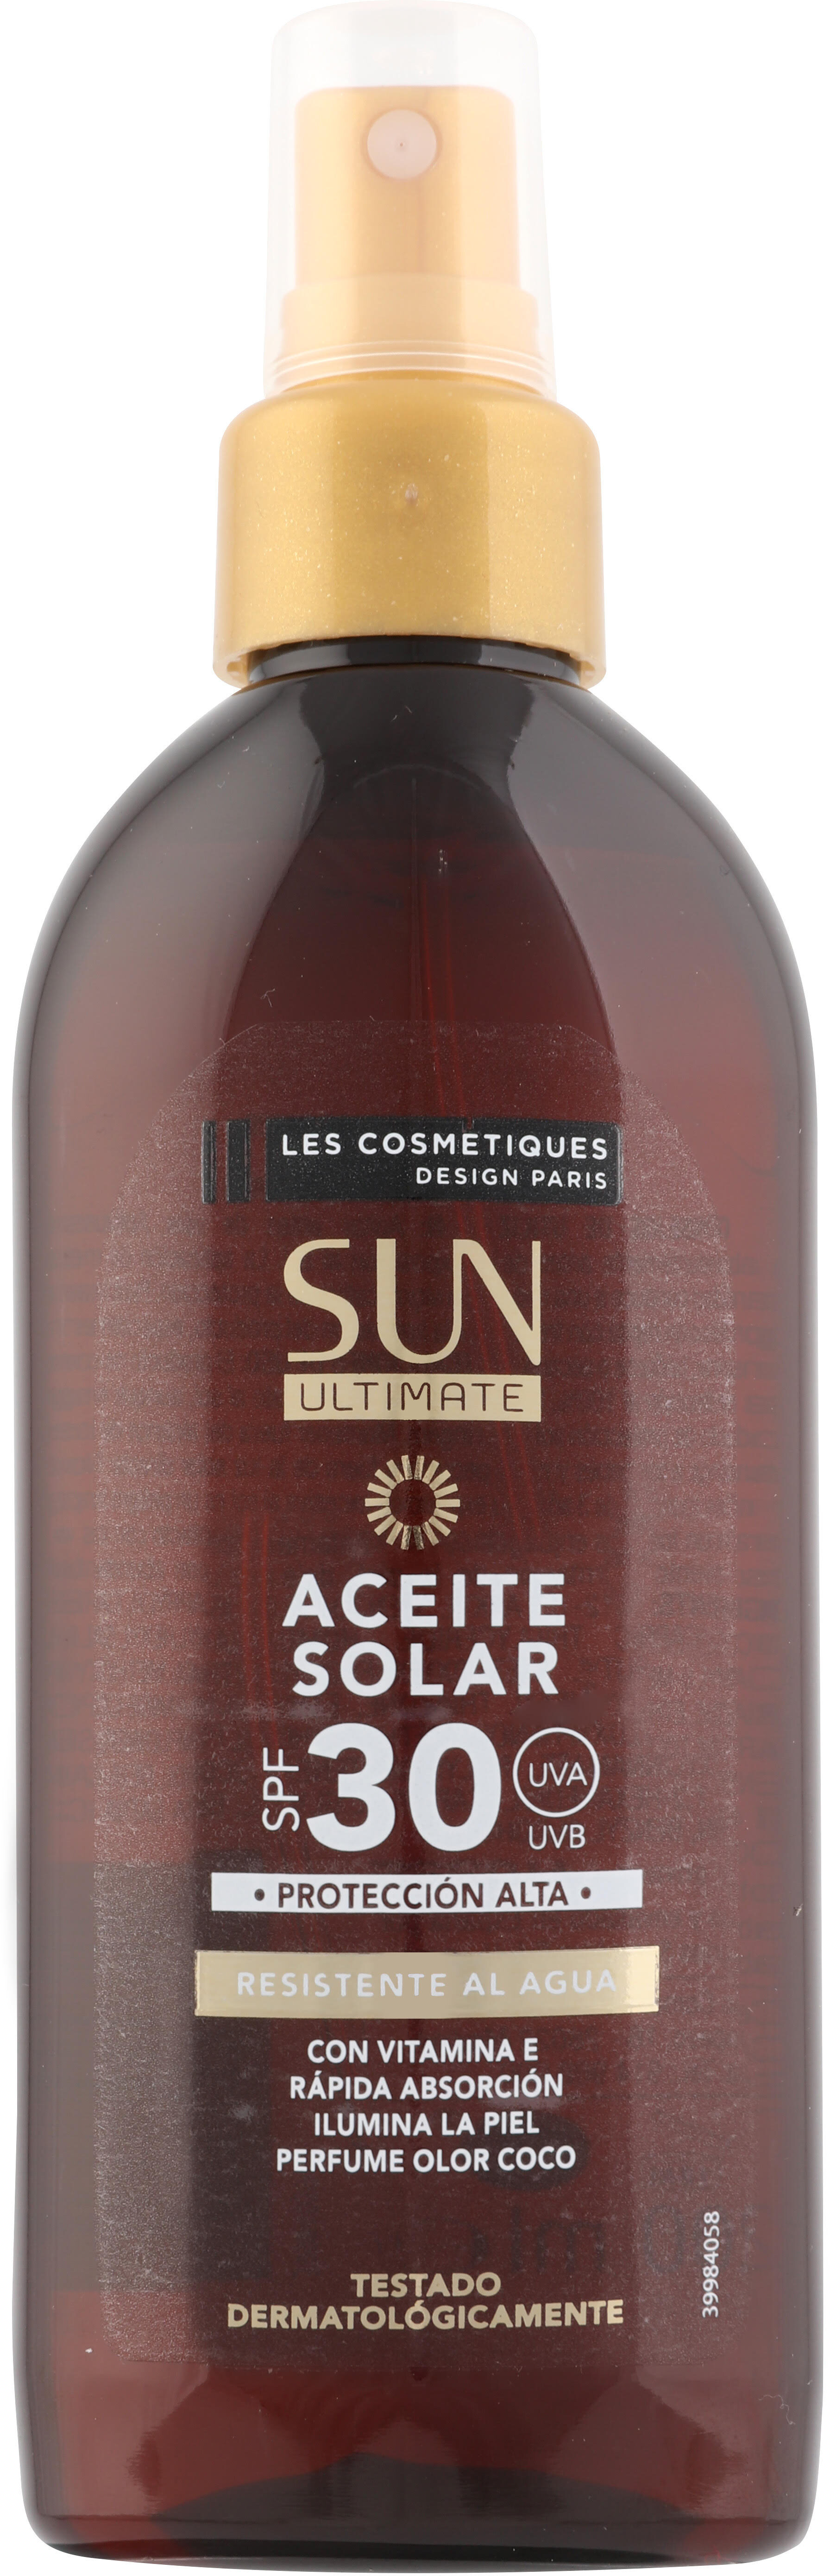 Aceite solar coco spf30 sun ultimate spray - Product - es